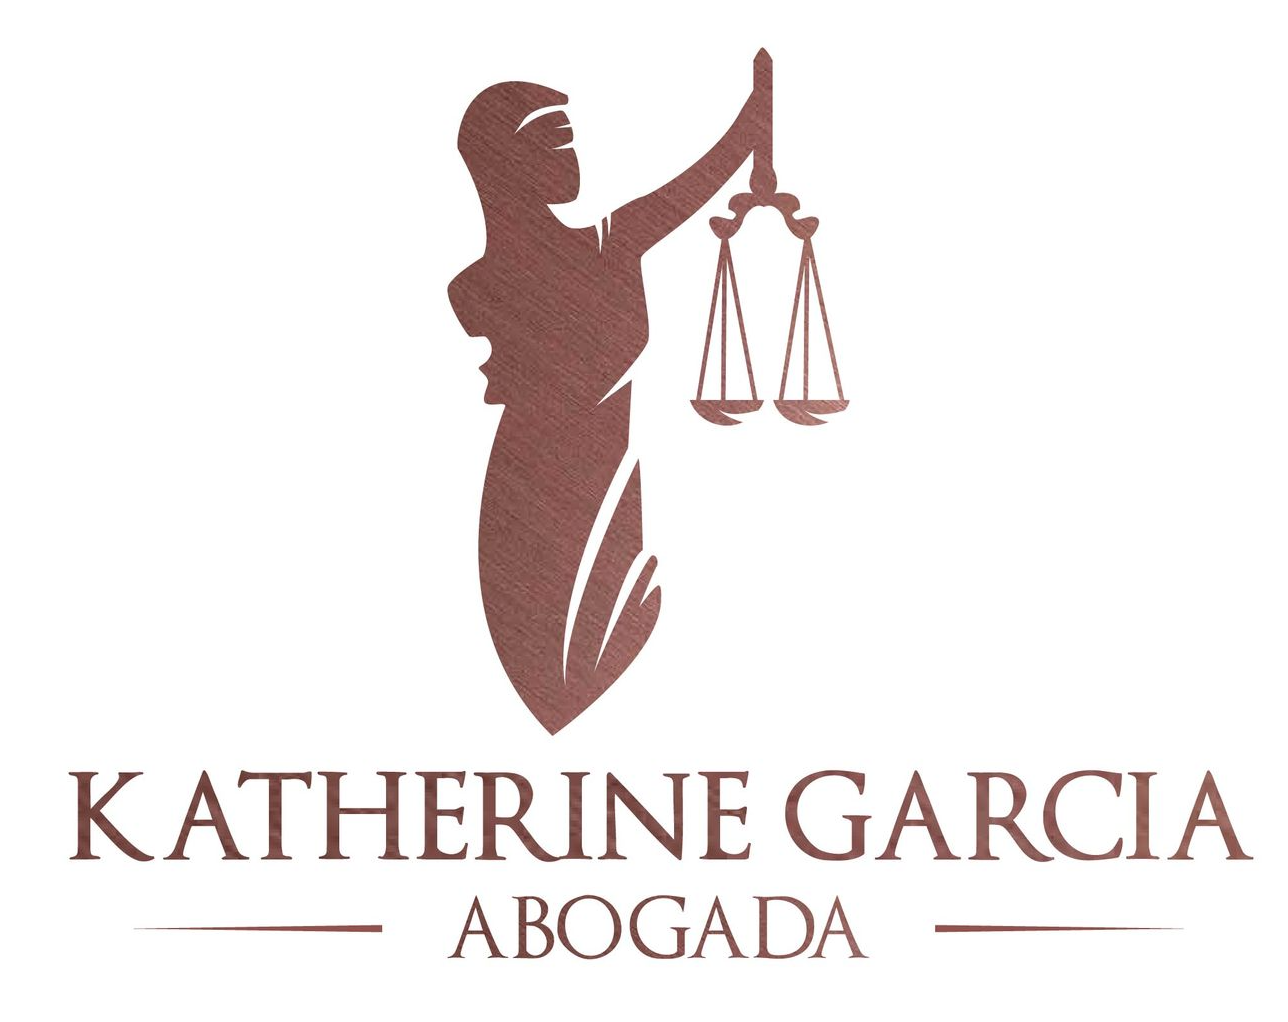 ABOGADA KATHERINE GARCÍA LOGO